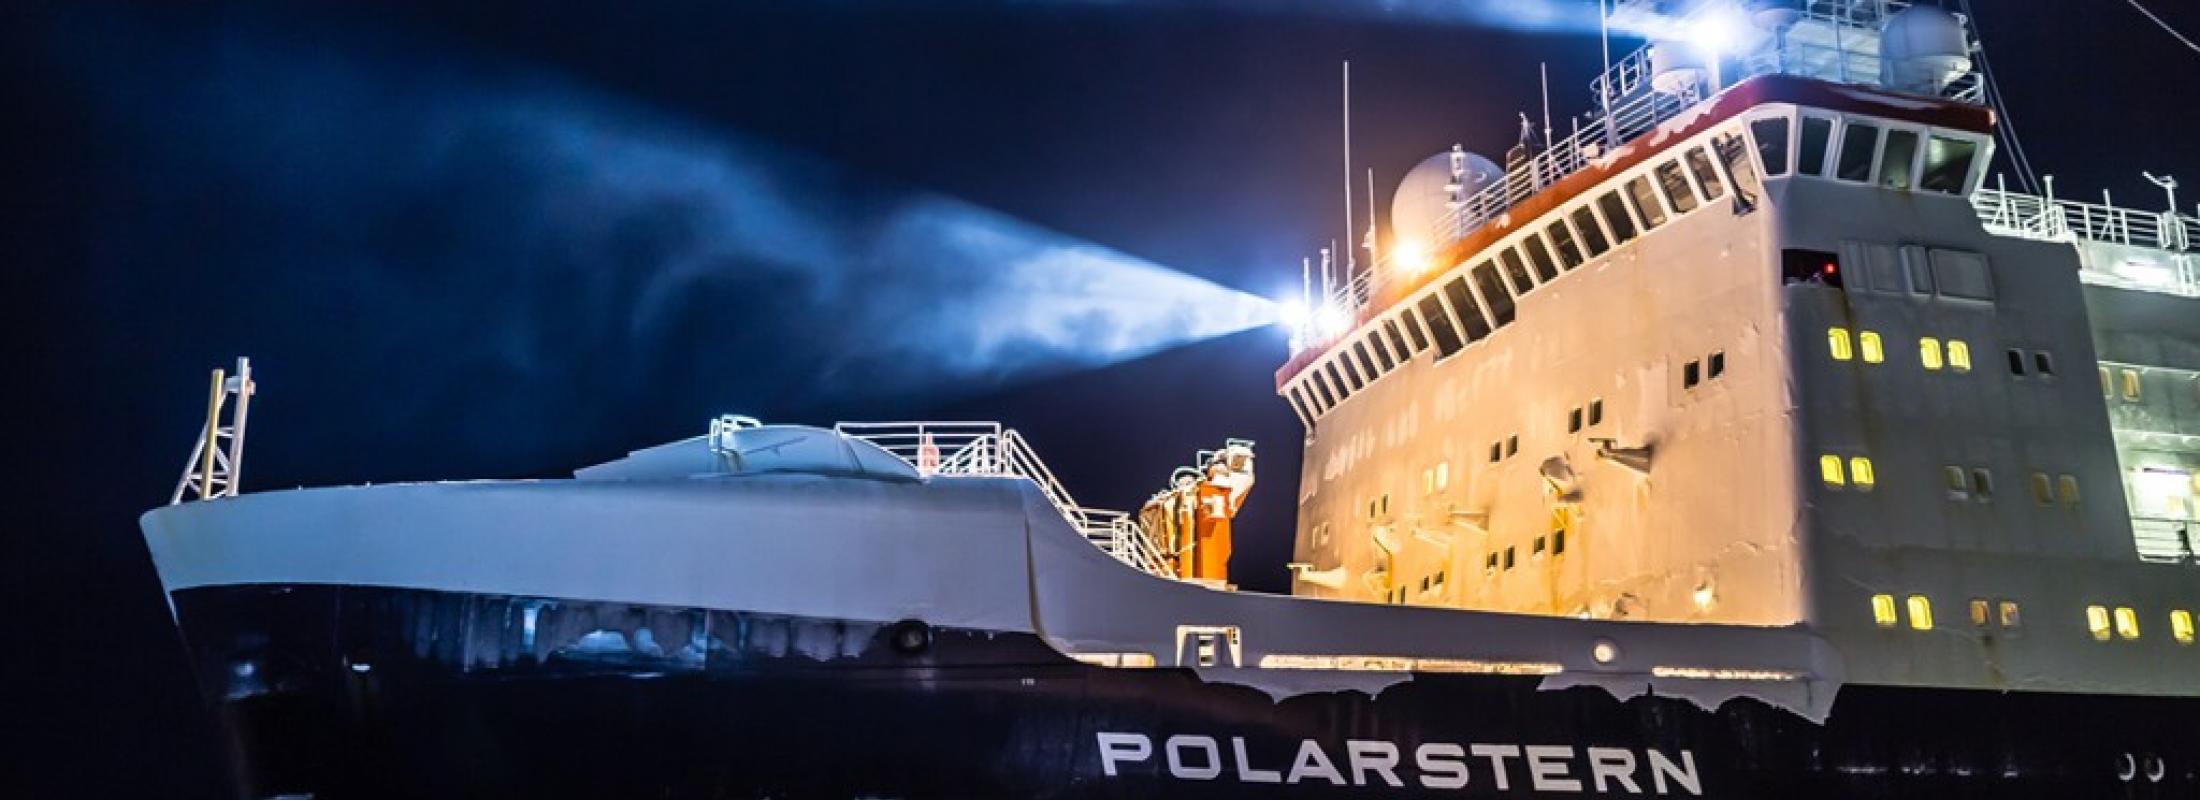 Polarstern research vessel.